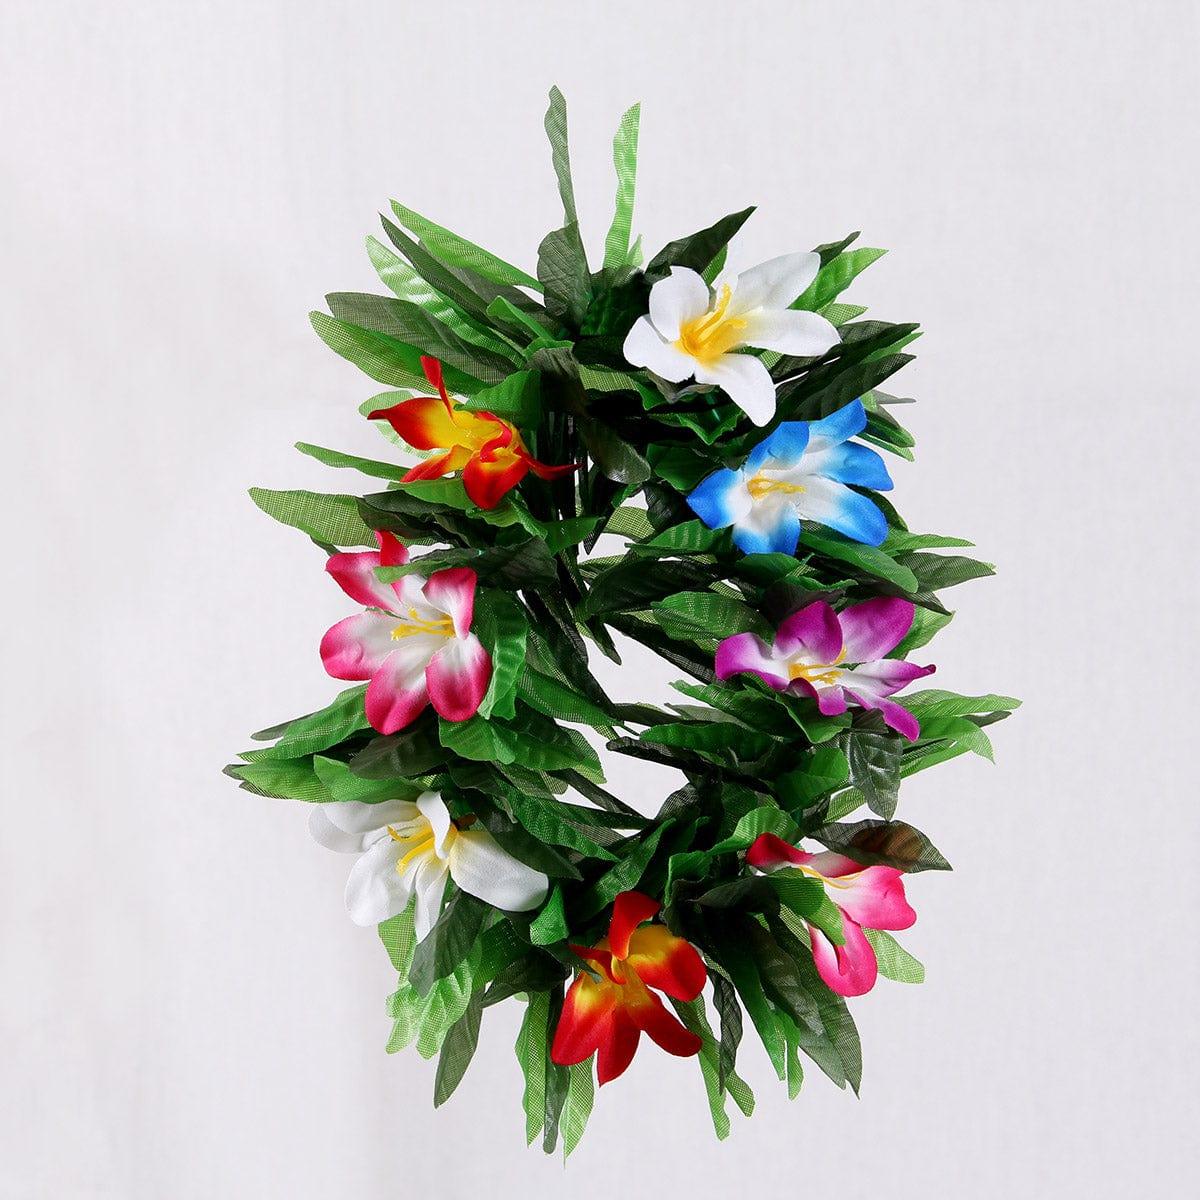 LIANGSHAN DAJIN GIFTS & TOYS CO LTD Theme Party Honolulu Flower Headband with Leaves, Multicolour